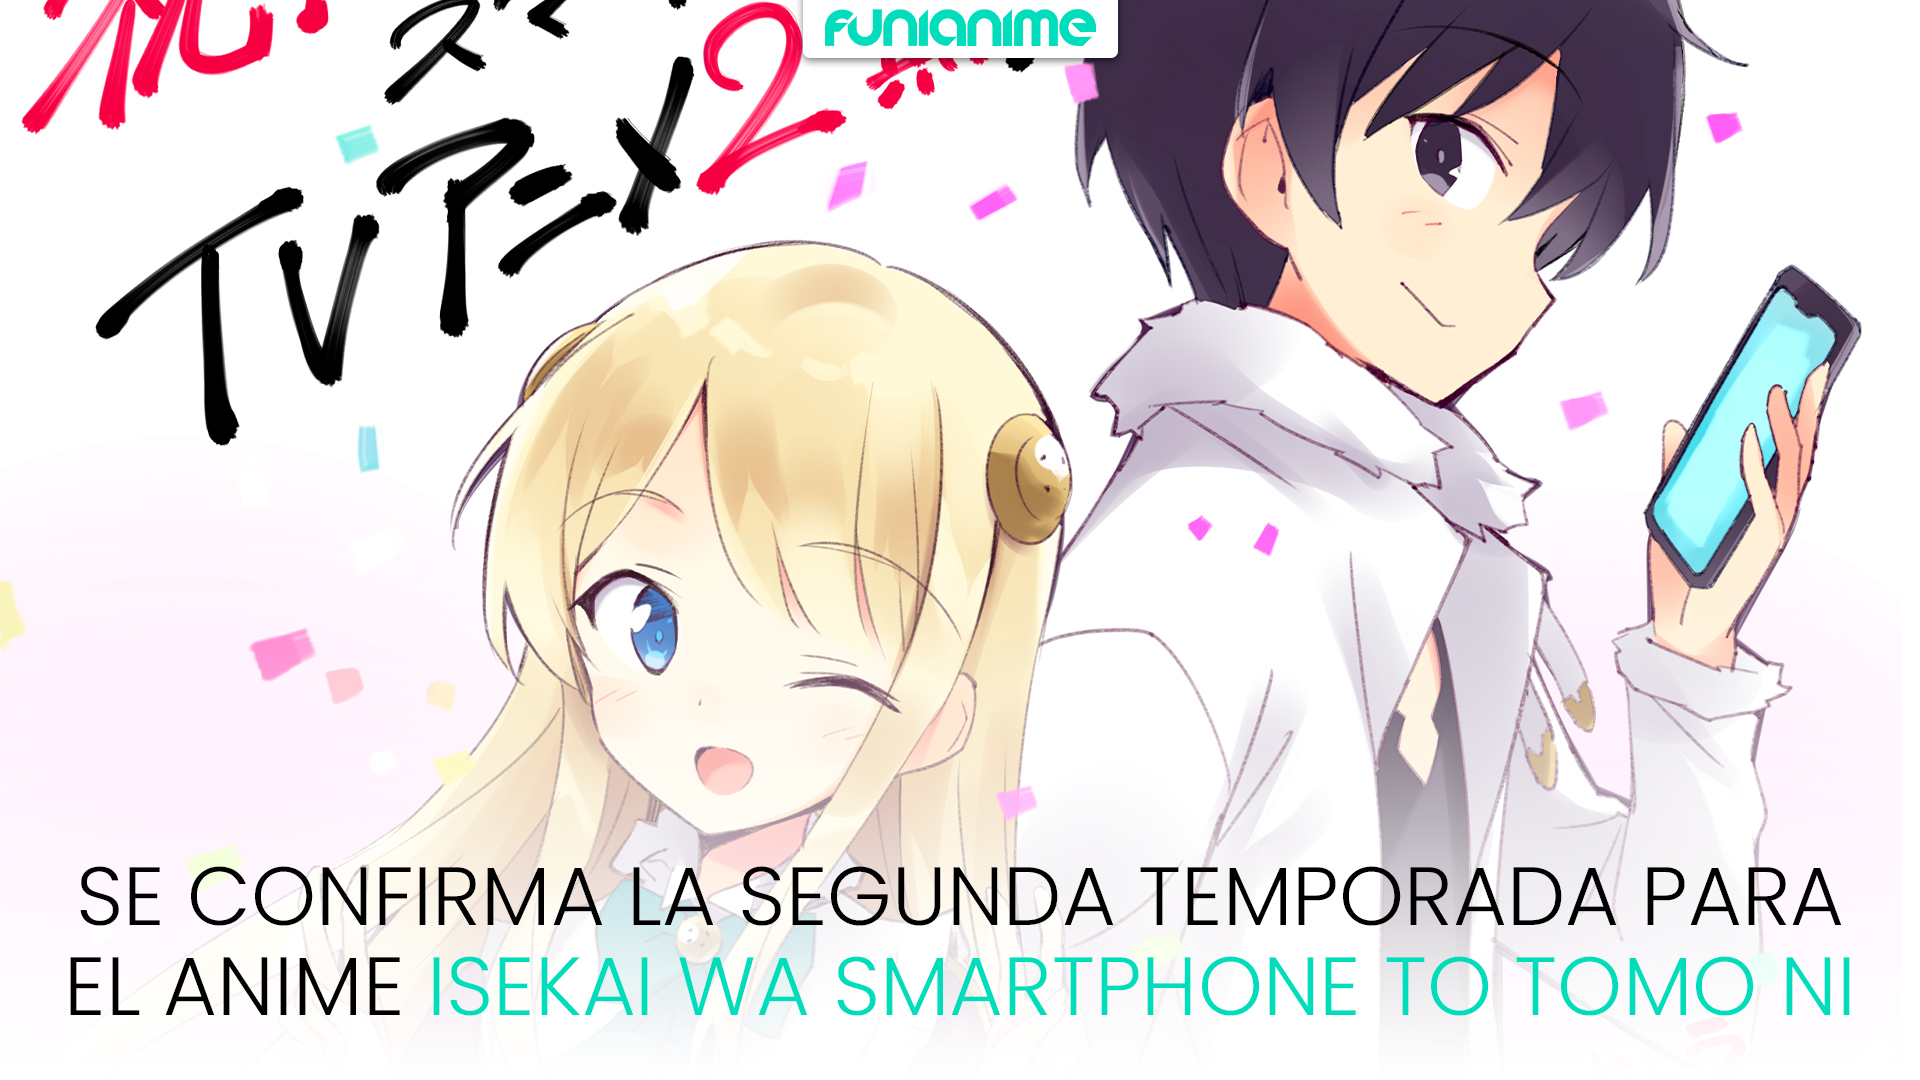 Se confirma la segunda temporada para el anime Isekai wa Smartphone to Tomo  ni - FUNiAnime LA